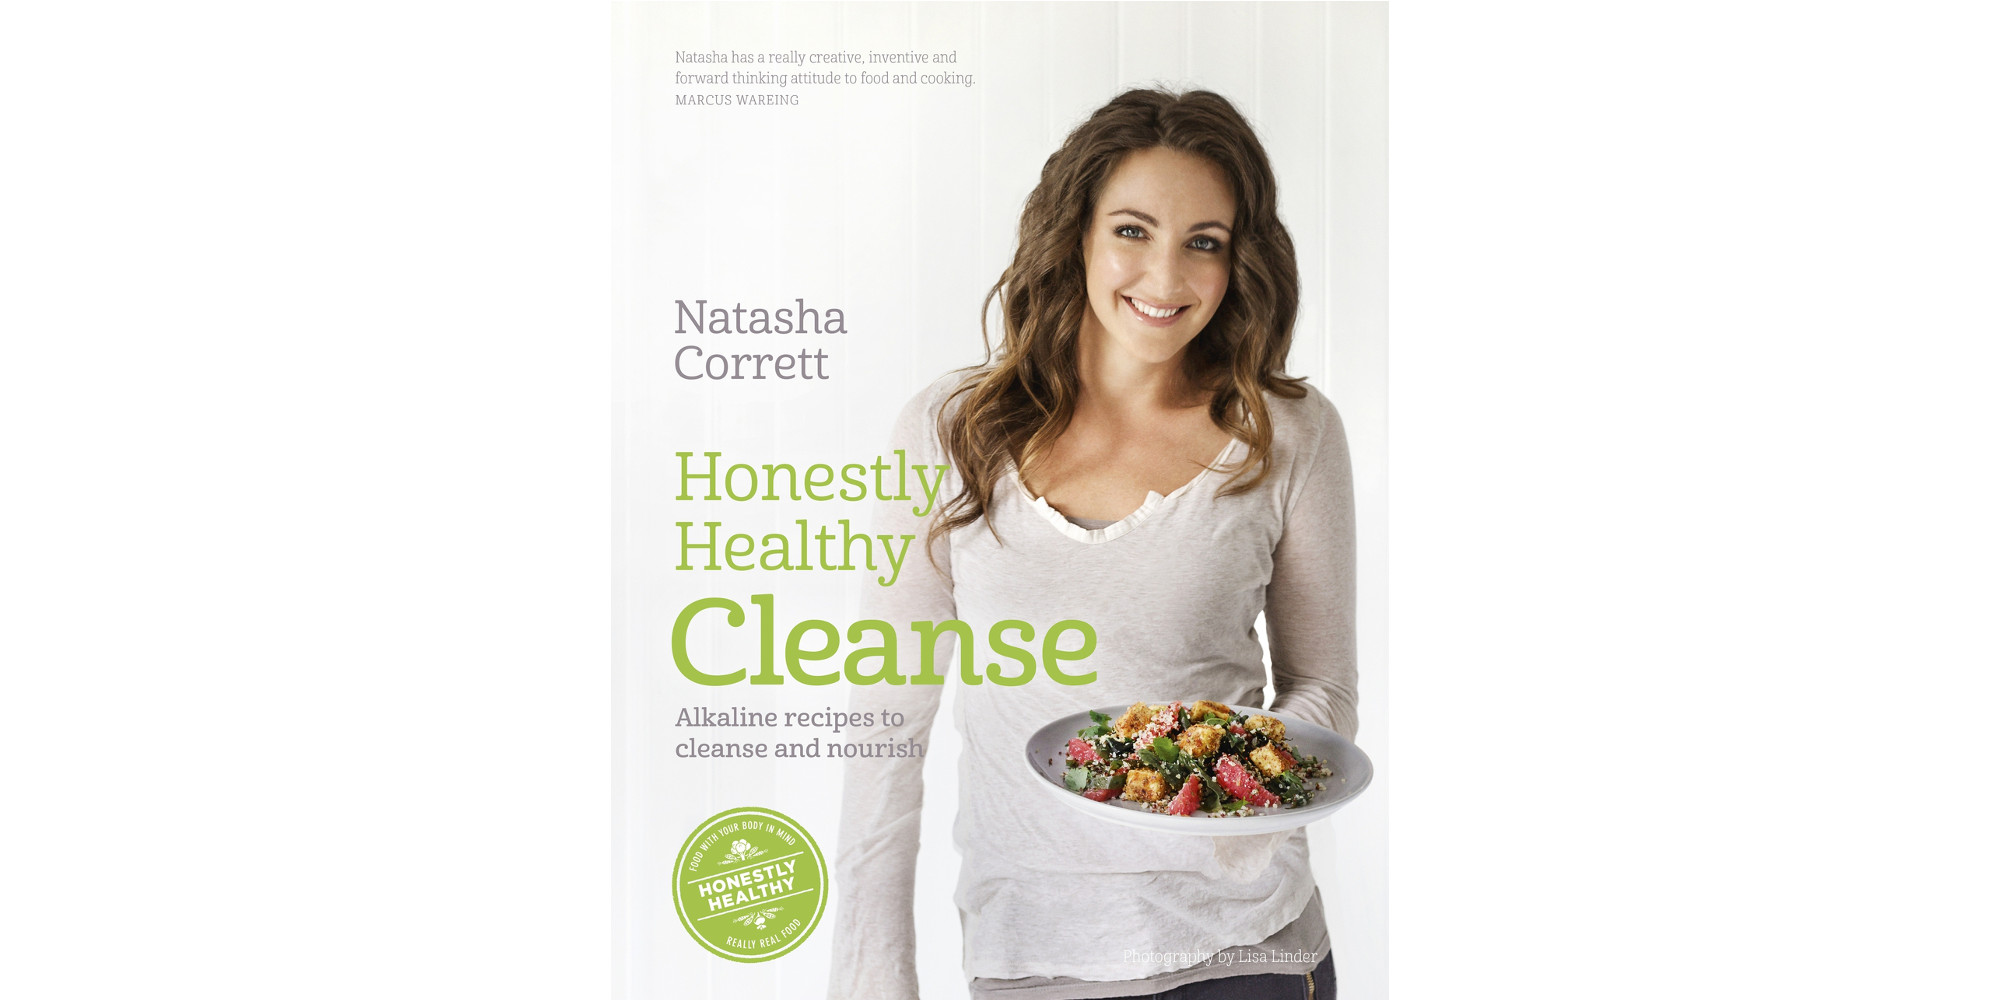 Honestly Healthy Cleanse by Natasha Corrett